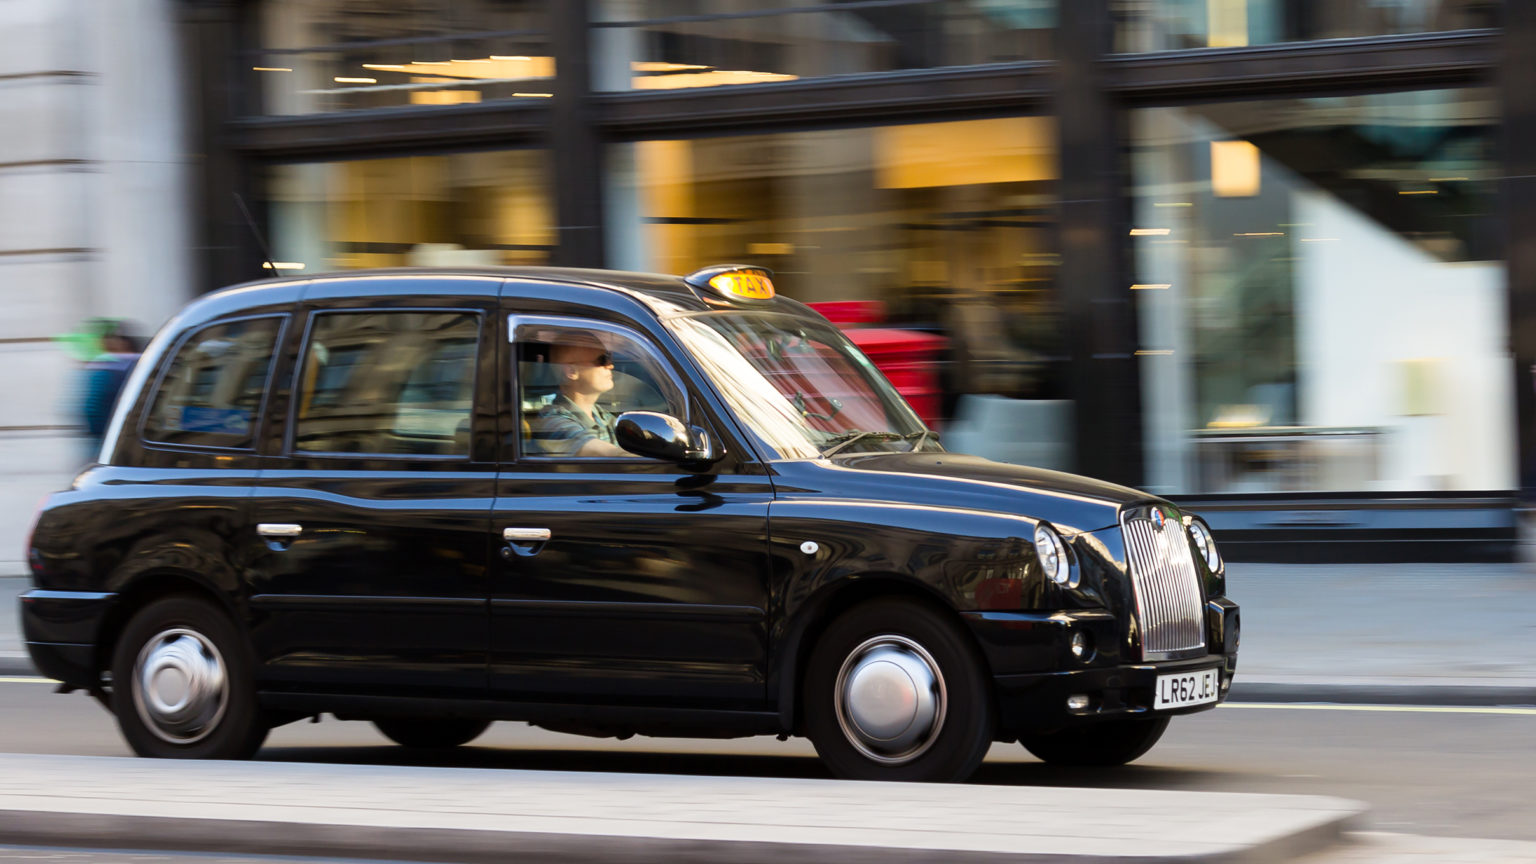 Taxi moving through London